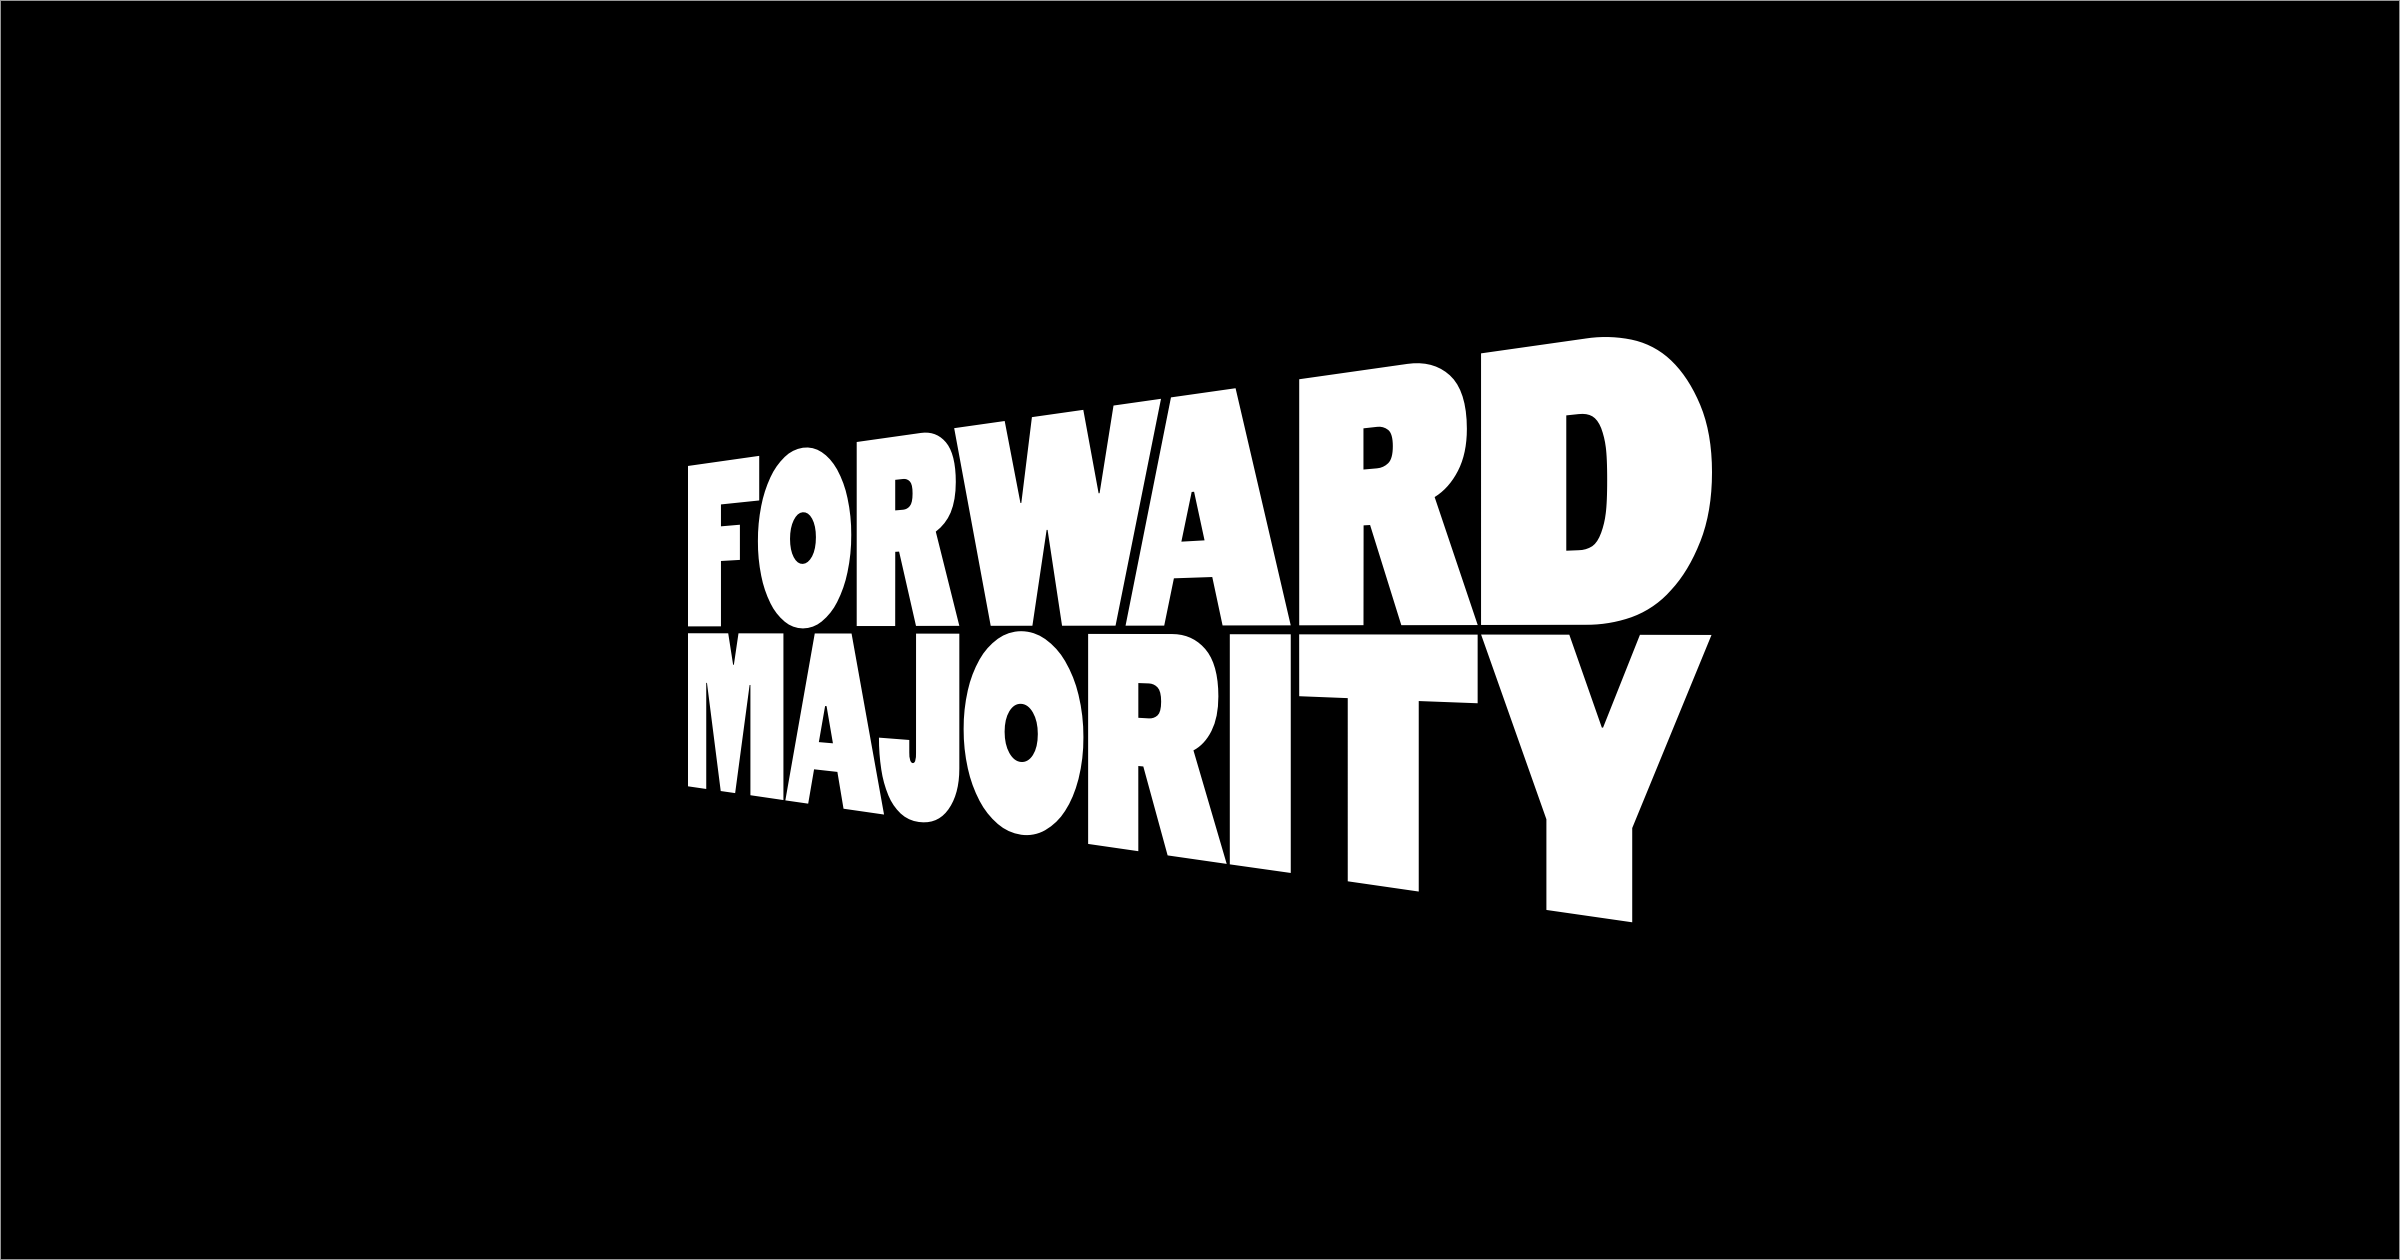 (c) Forwardmajority.org